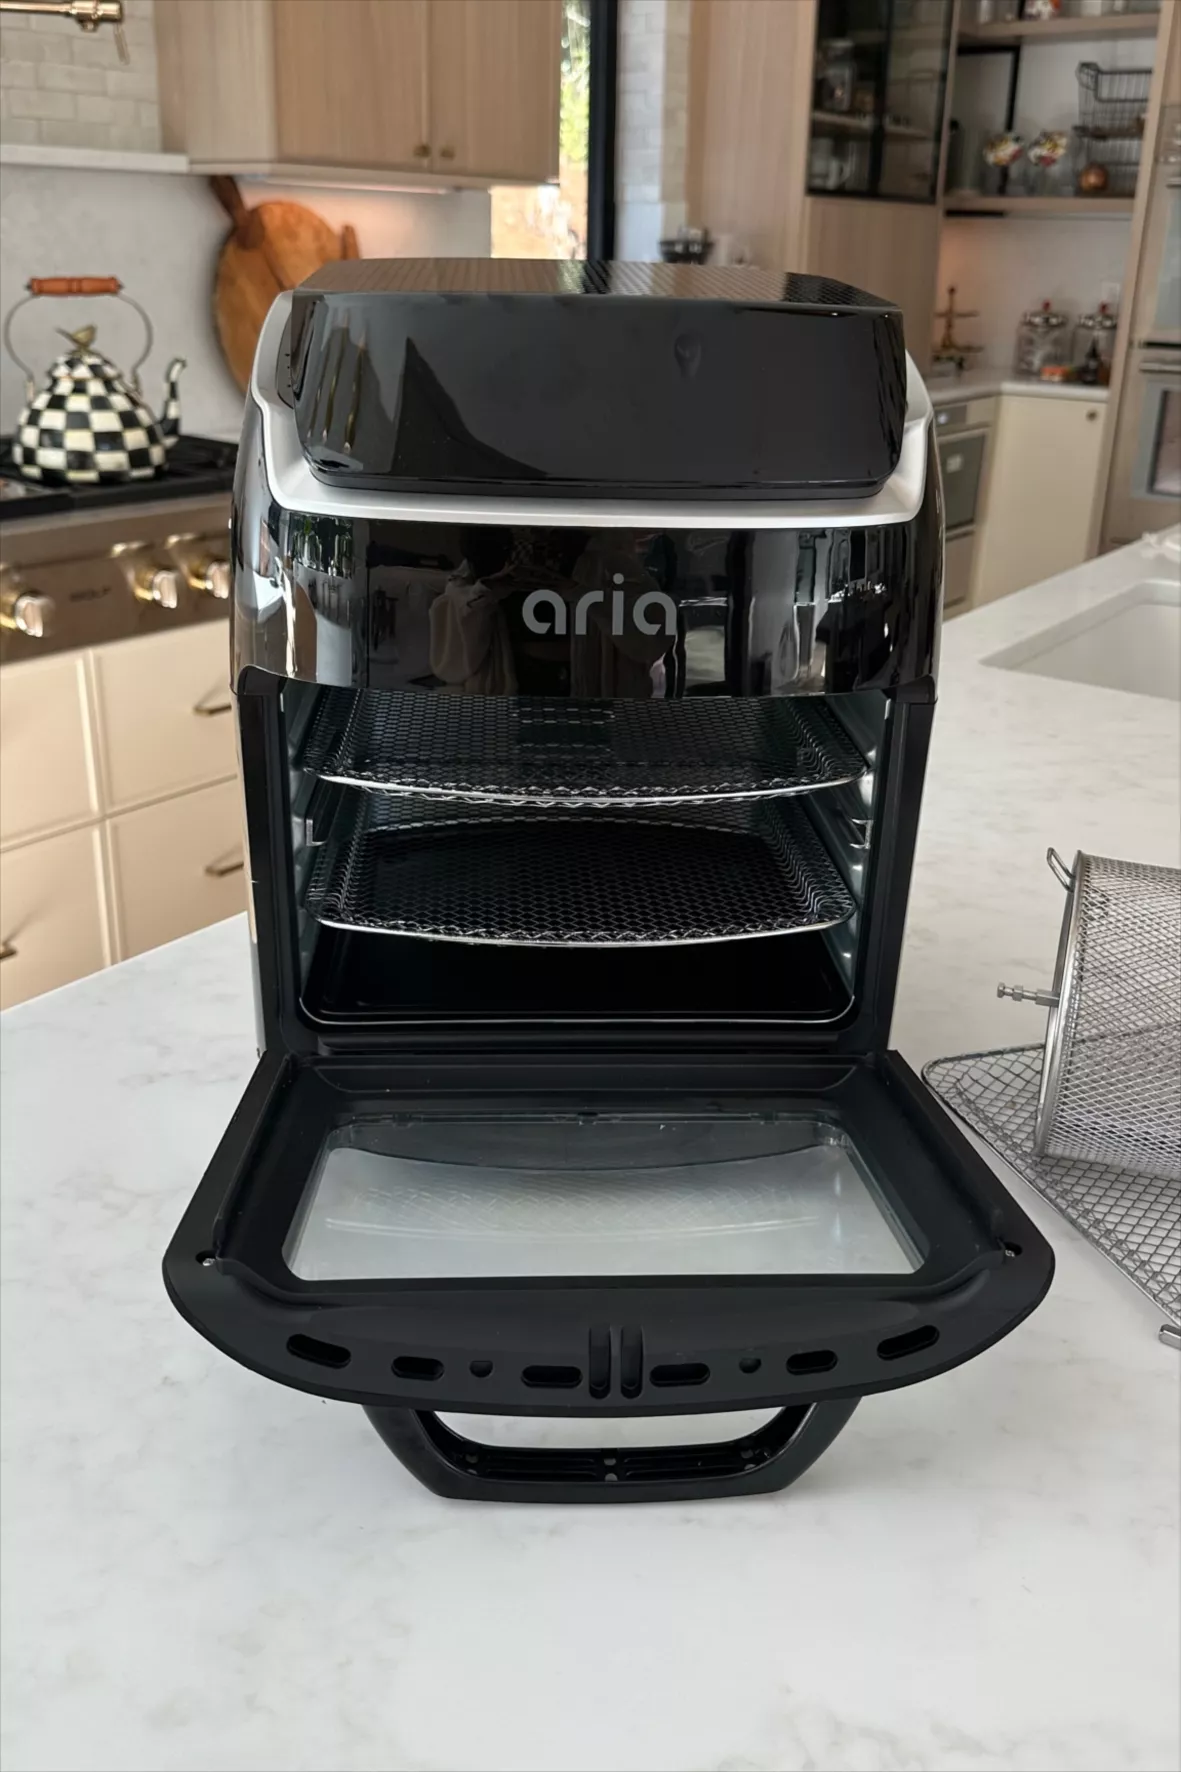  Aria Air Fryers AAO-890 10Qt Air Fryer Oven, Black